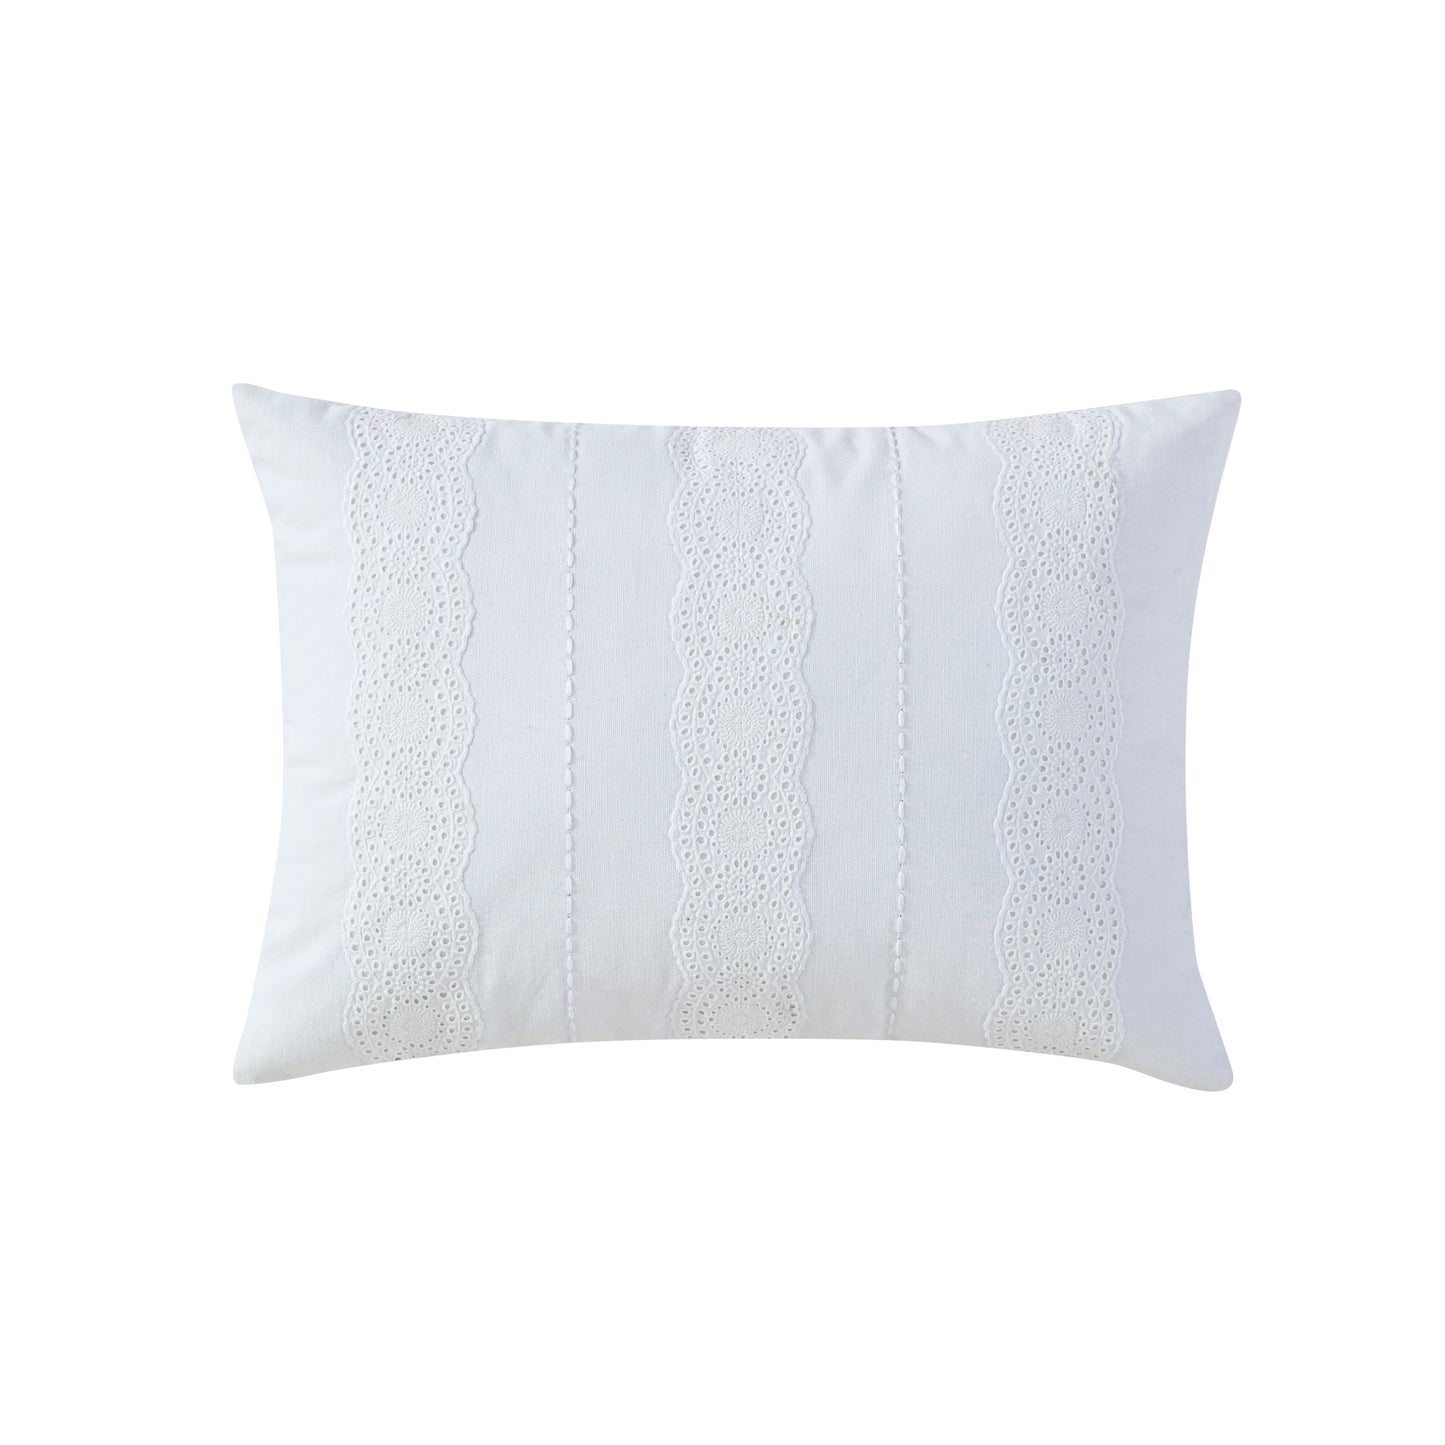 Peri Home Linen Eyelet Decorative Pillow